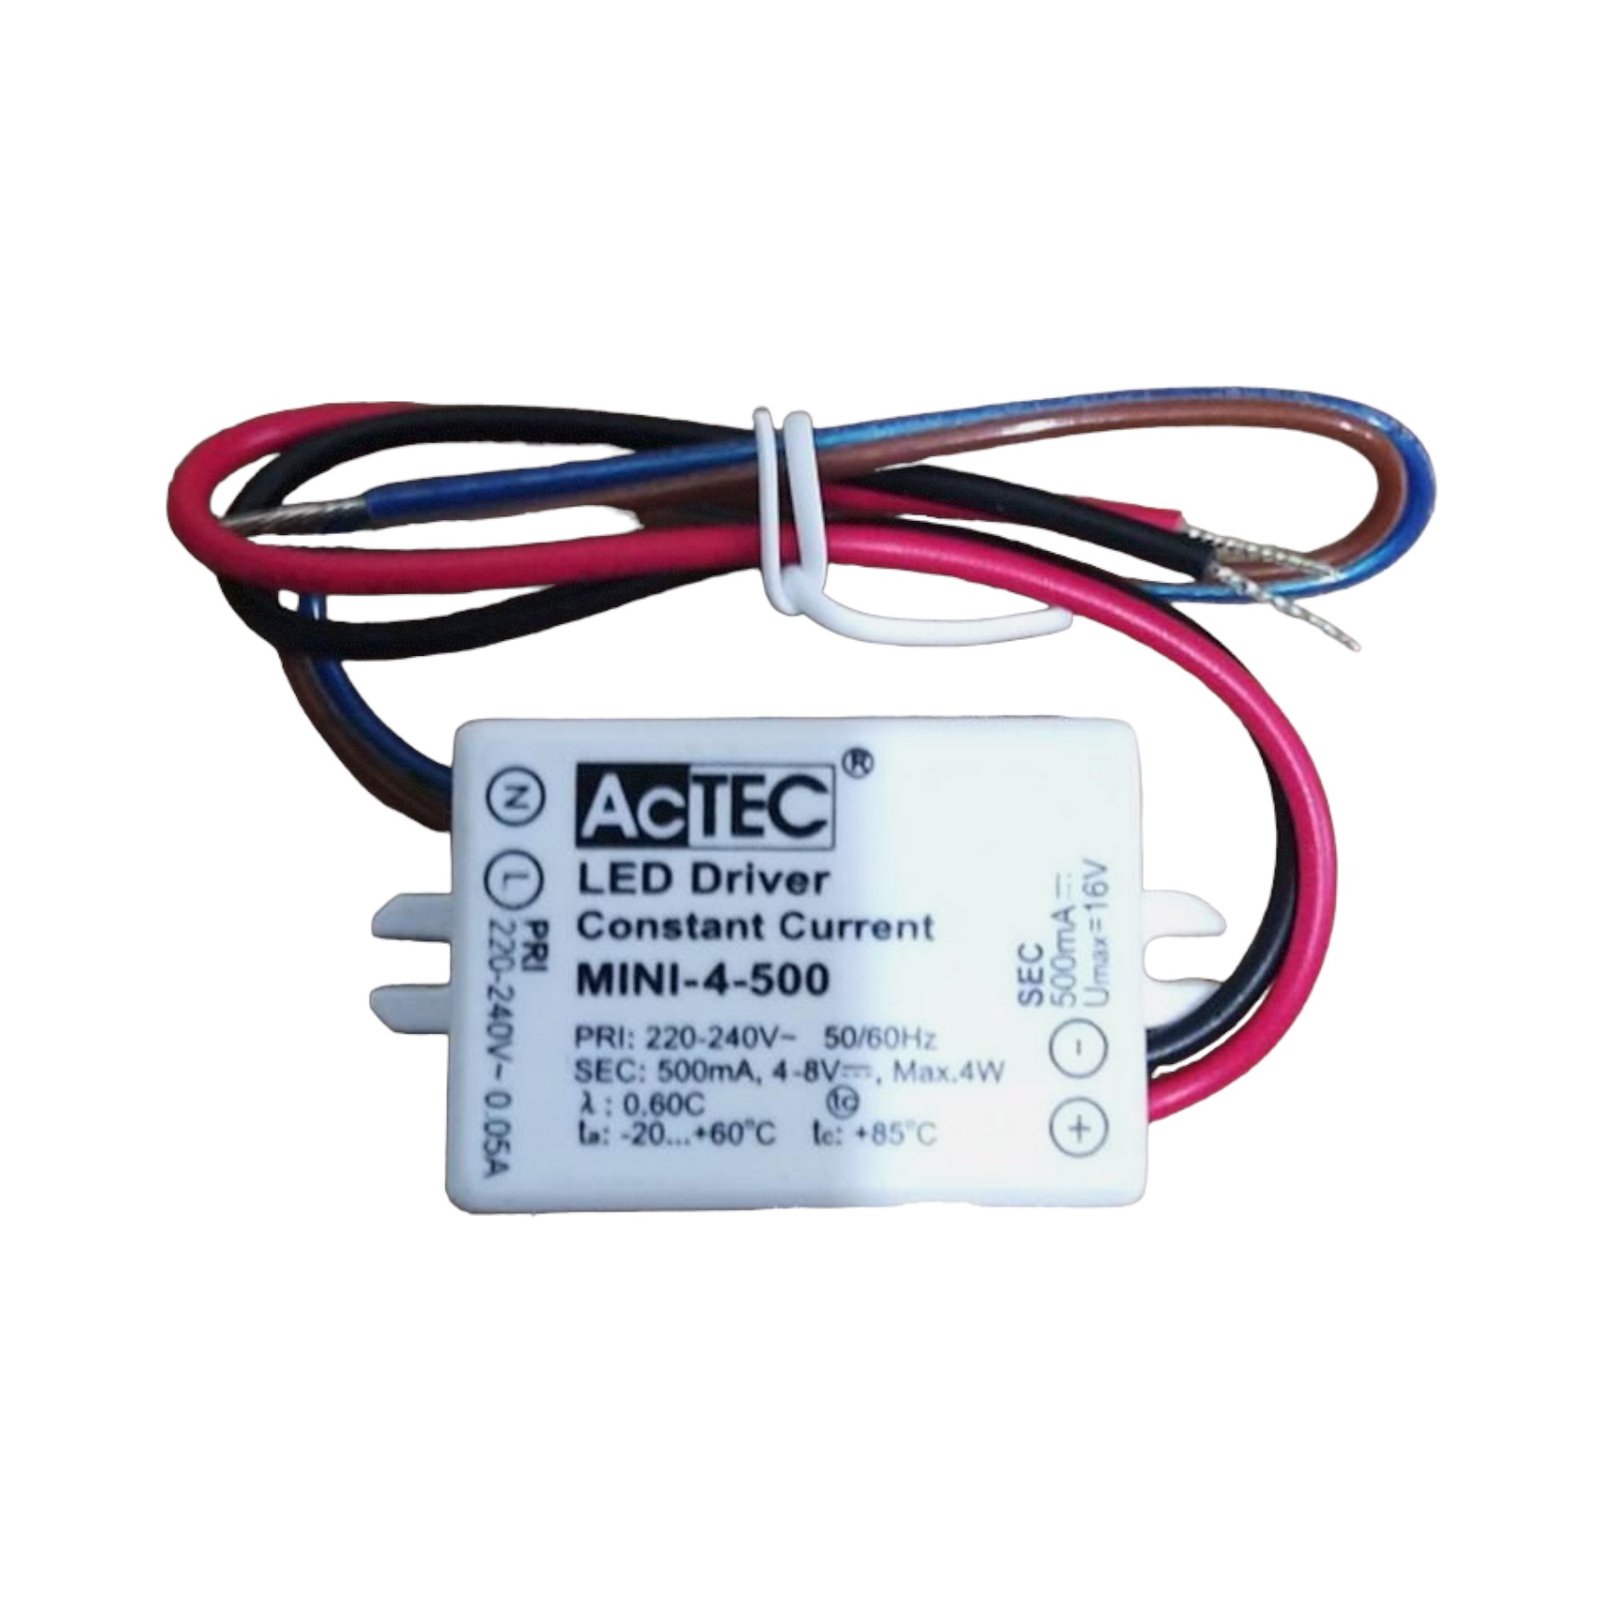 AcTEC Mini LED driver CC 500mA, 4W, IP65